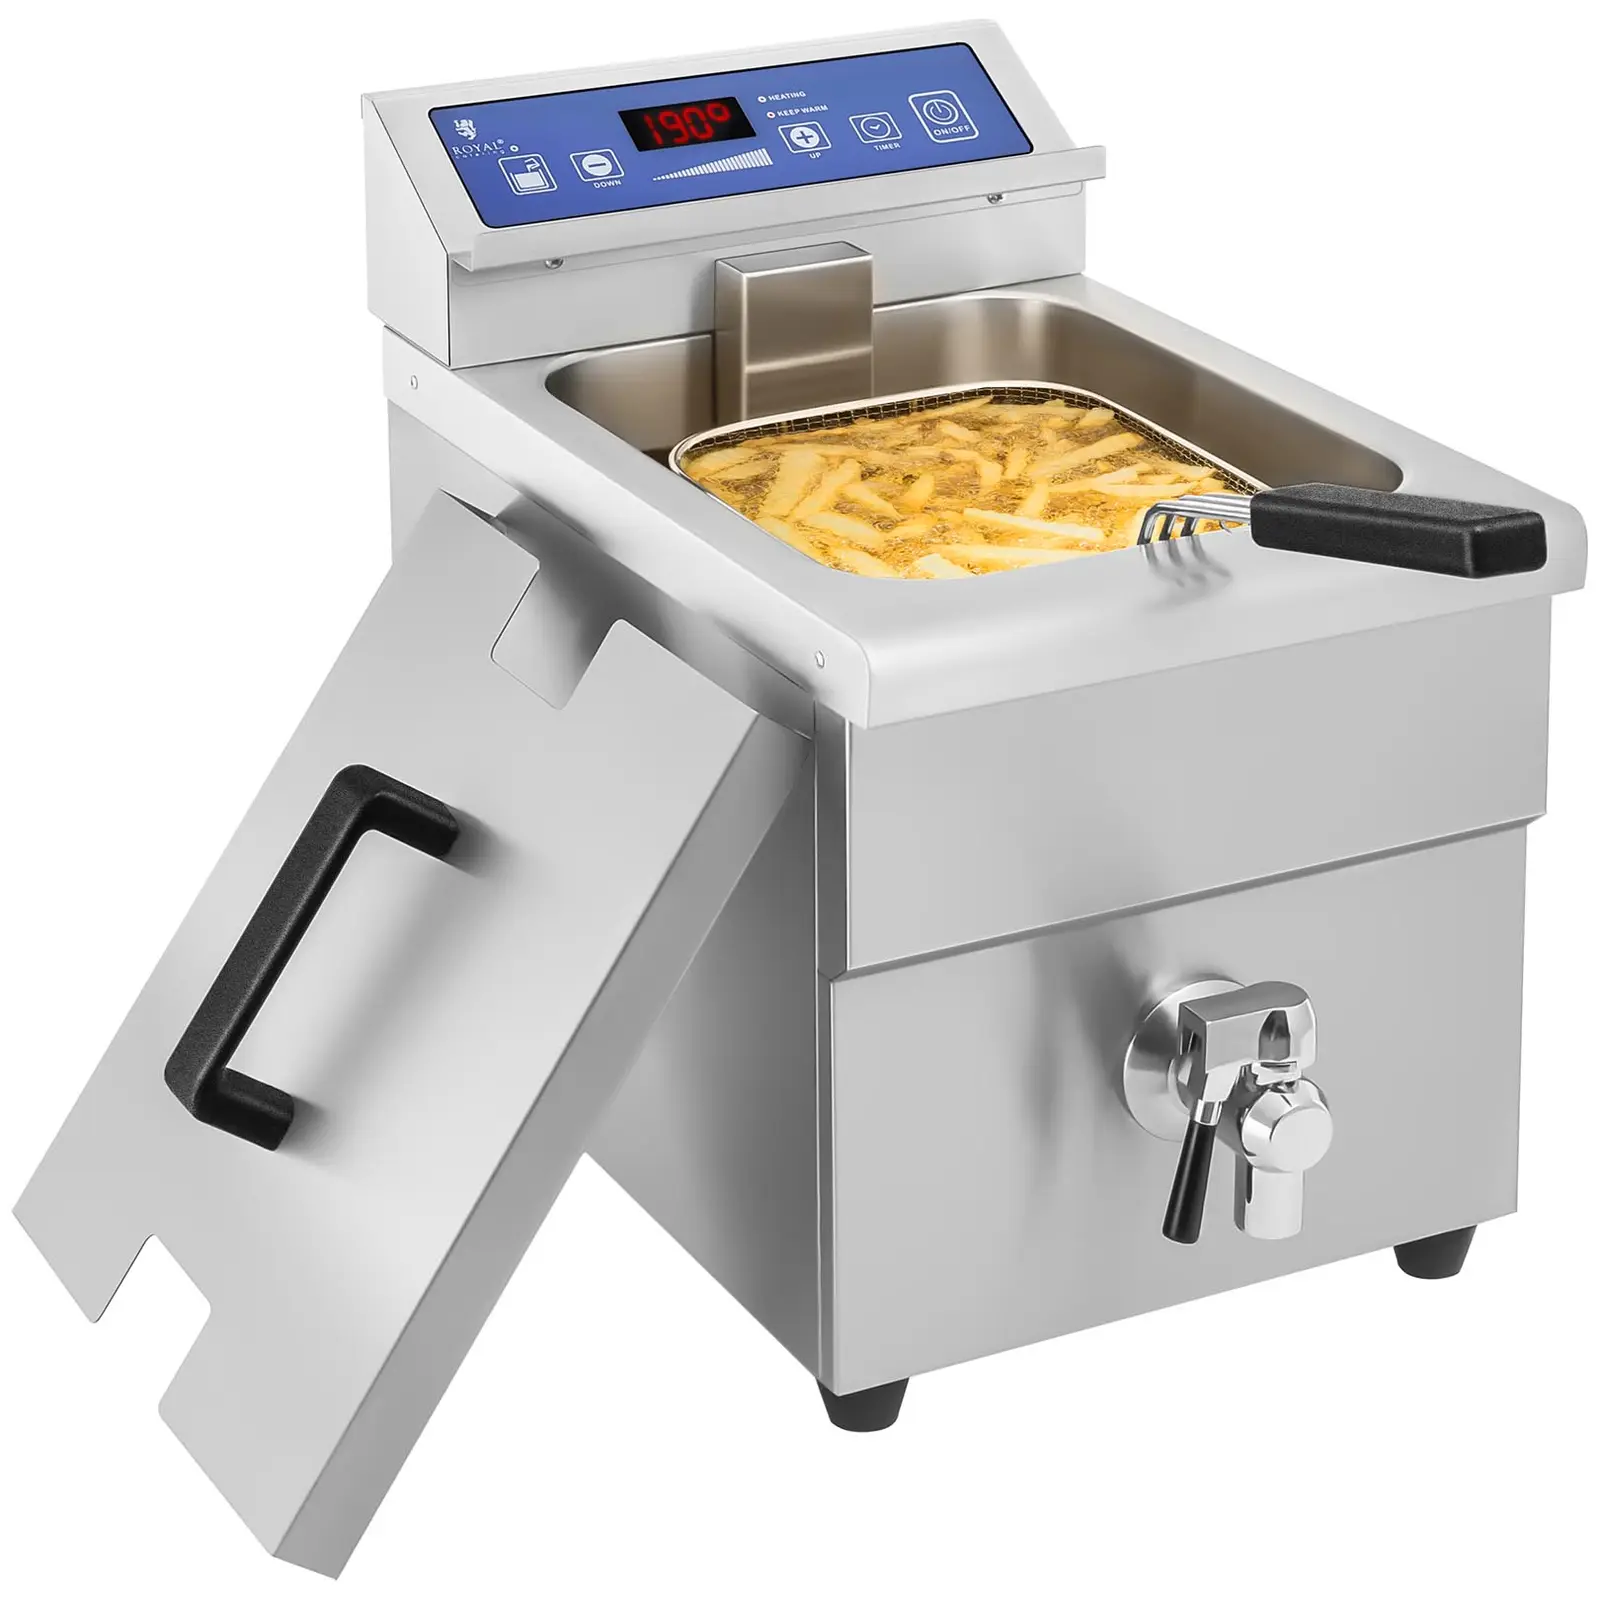 Inductie friteuse  – 1x 10 liter – 60 tot 190°C